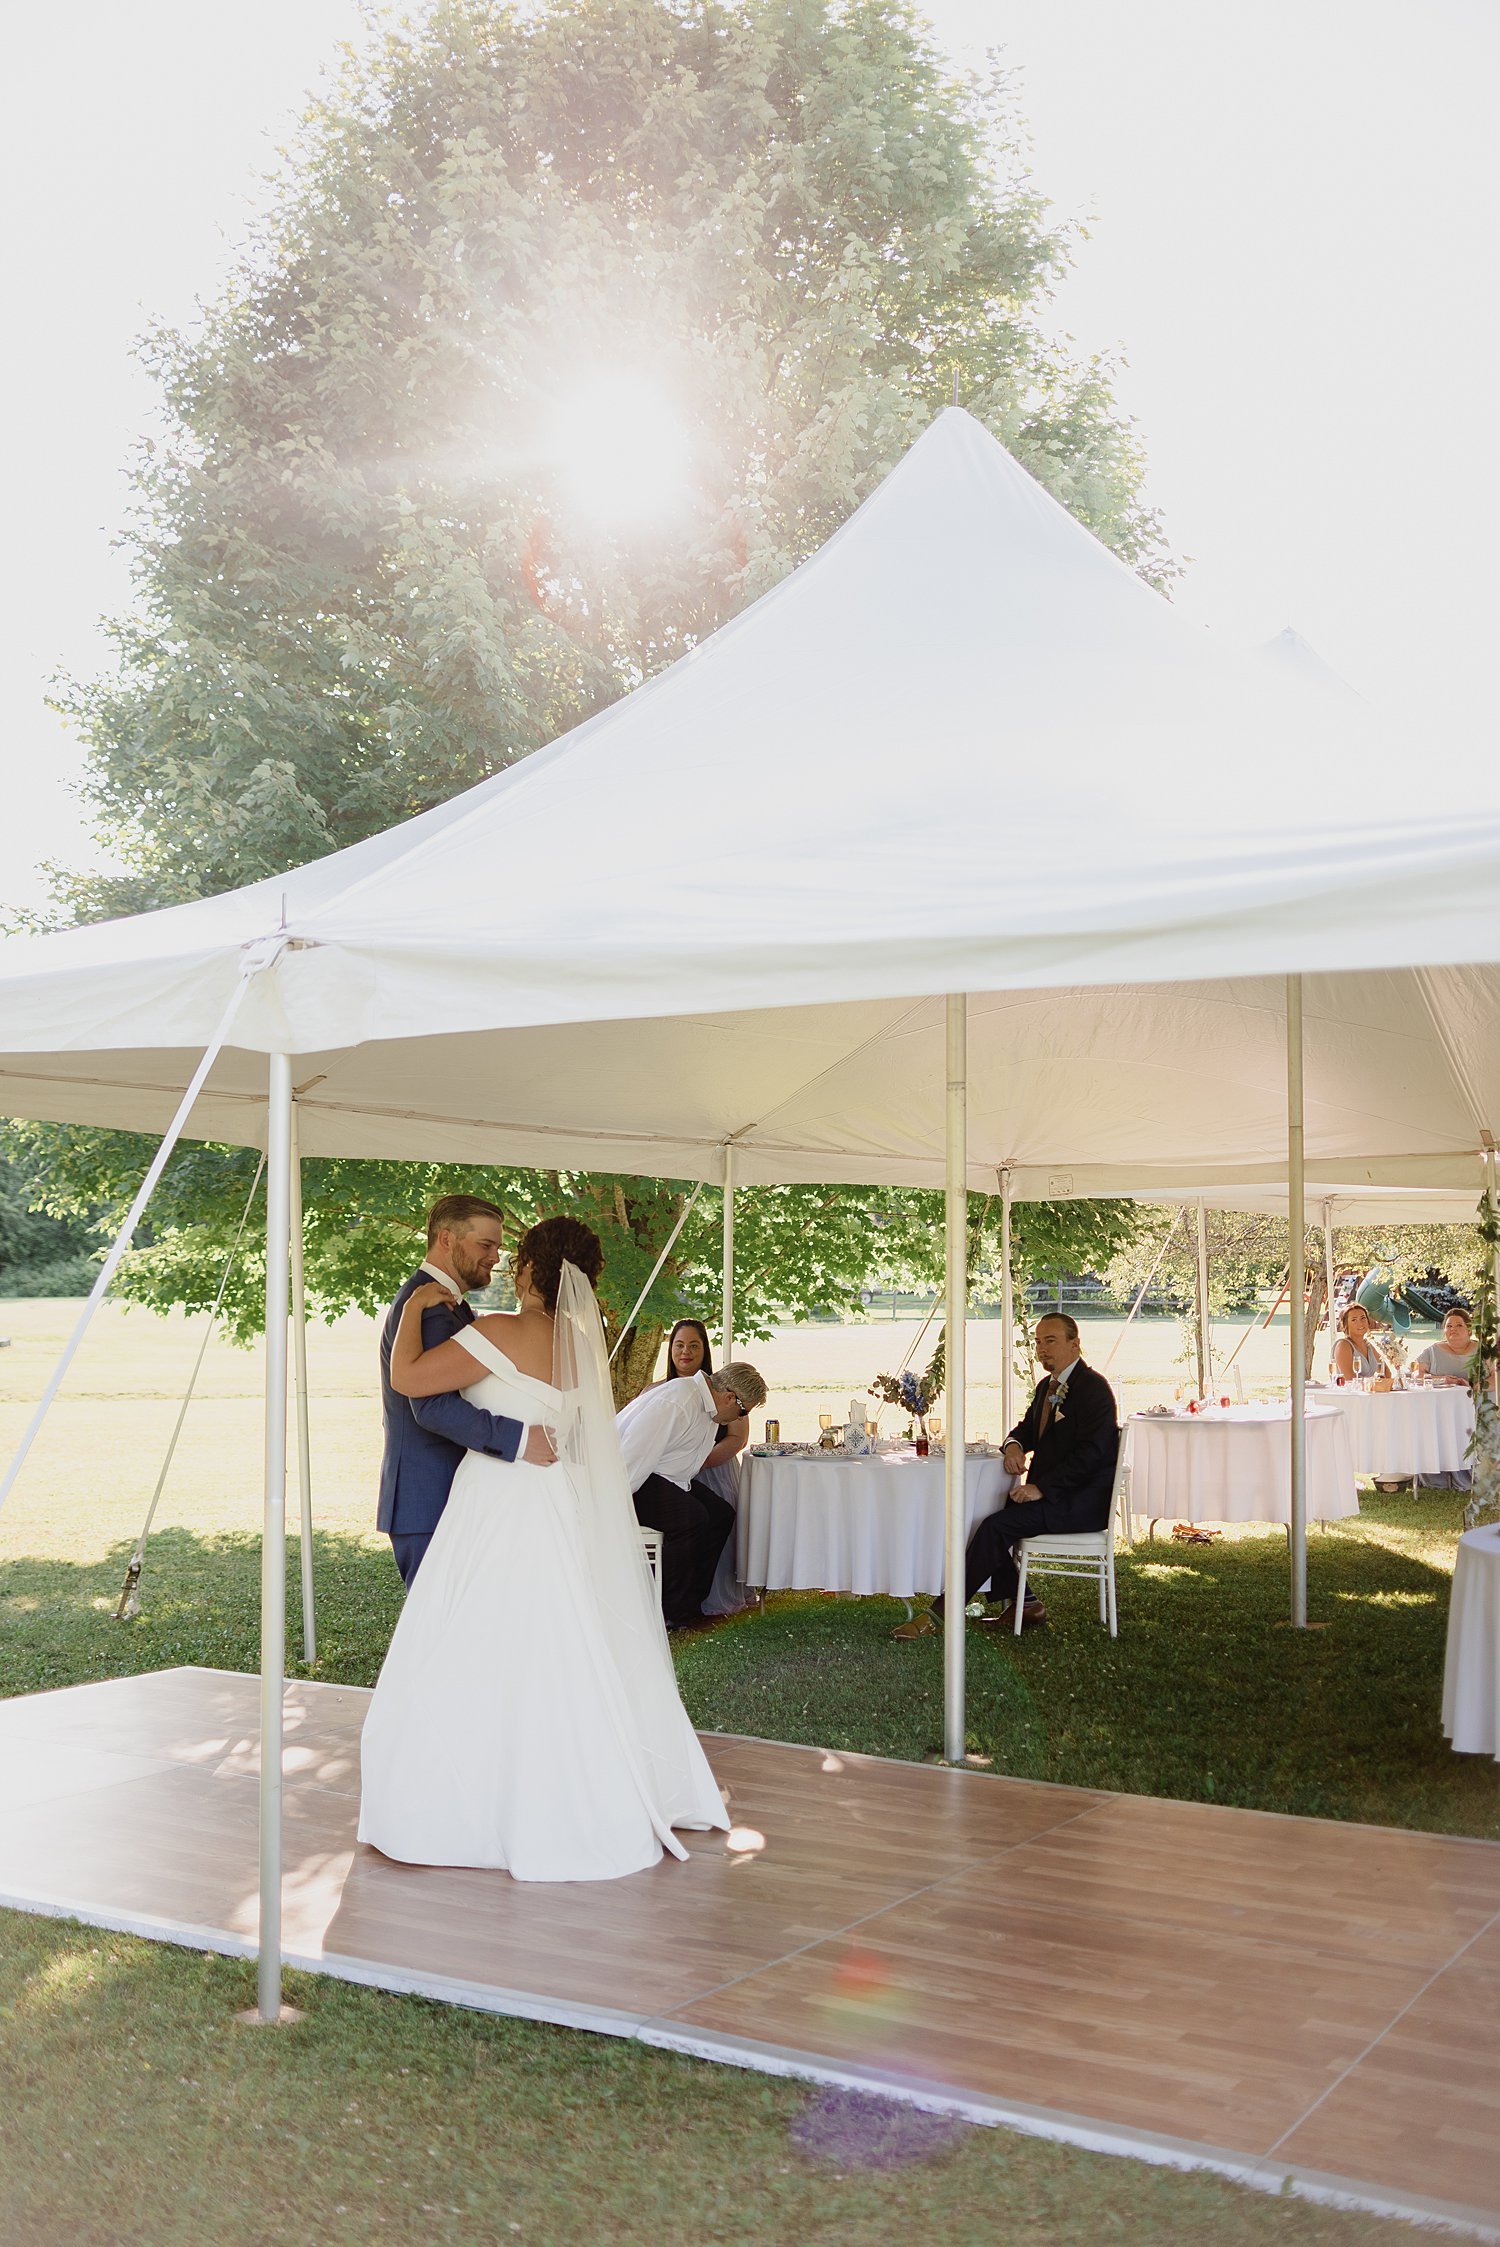 Elegant Summer Backyard Tented Wedding in Sydenham, Ontario | Prince Edward County Wedding Photographer | Holly McMurter Photographs_0078.jpg